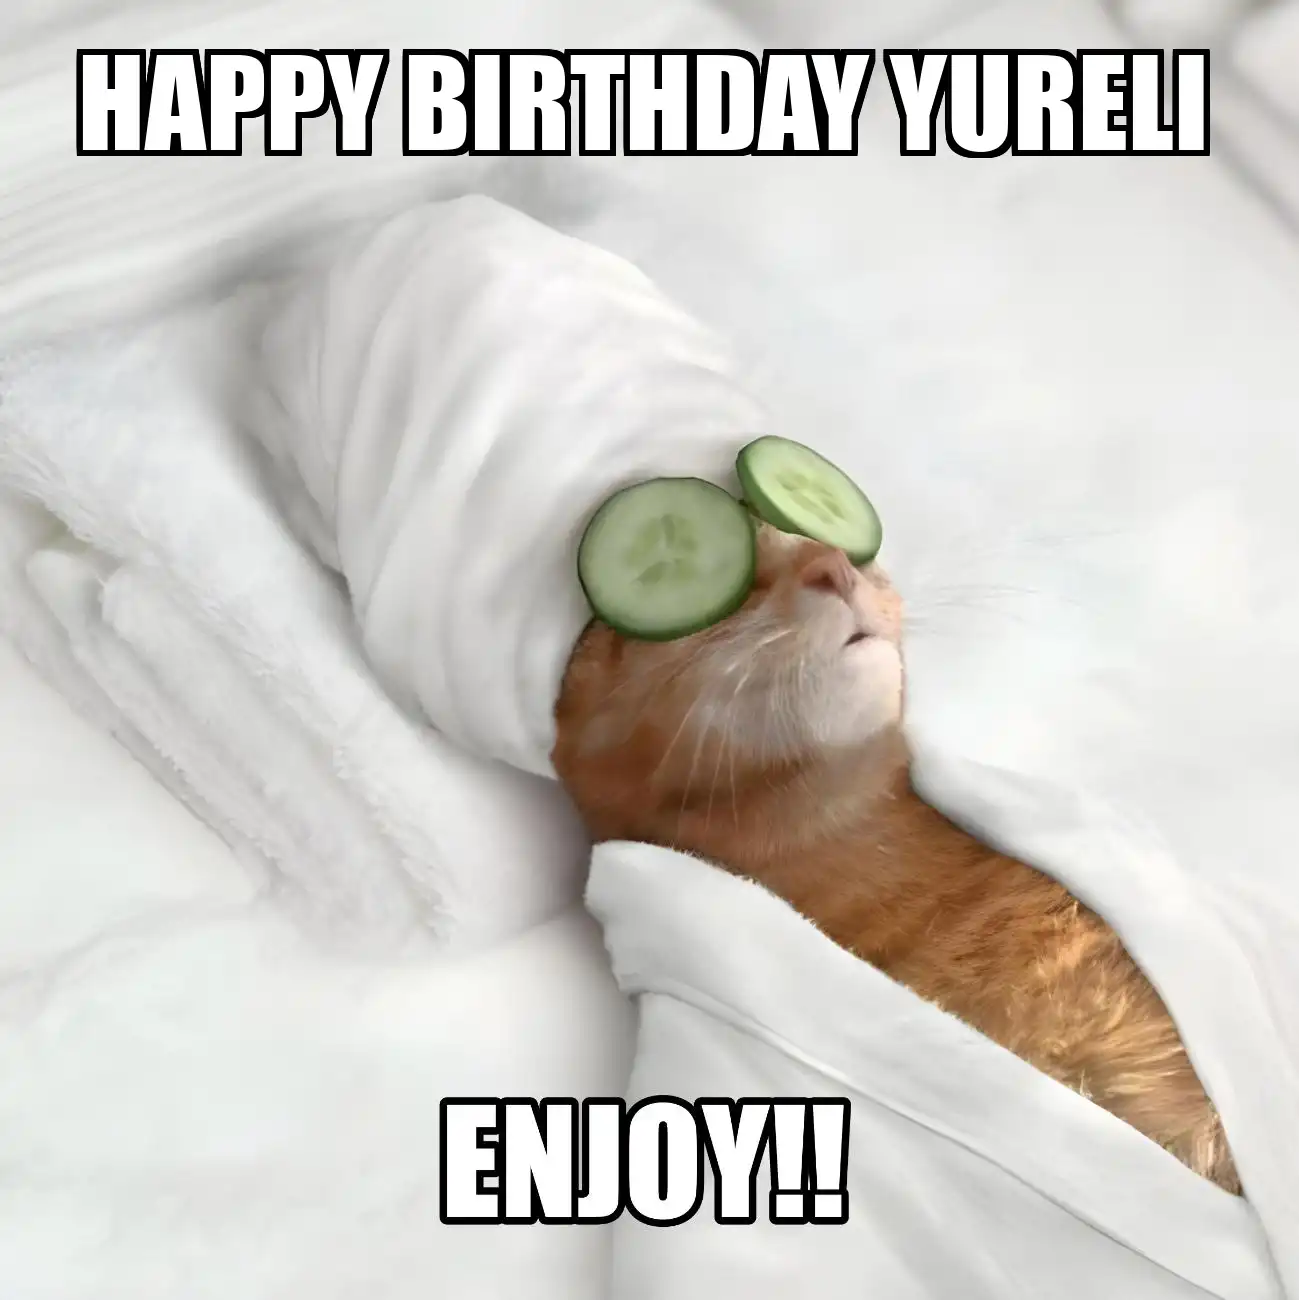 Happy Birthday Yureli Enjoy Cat Meme